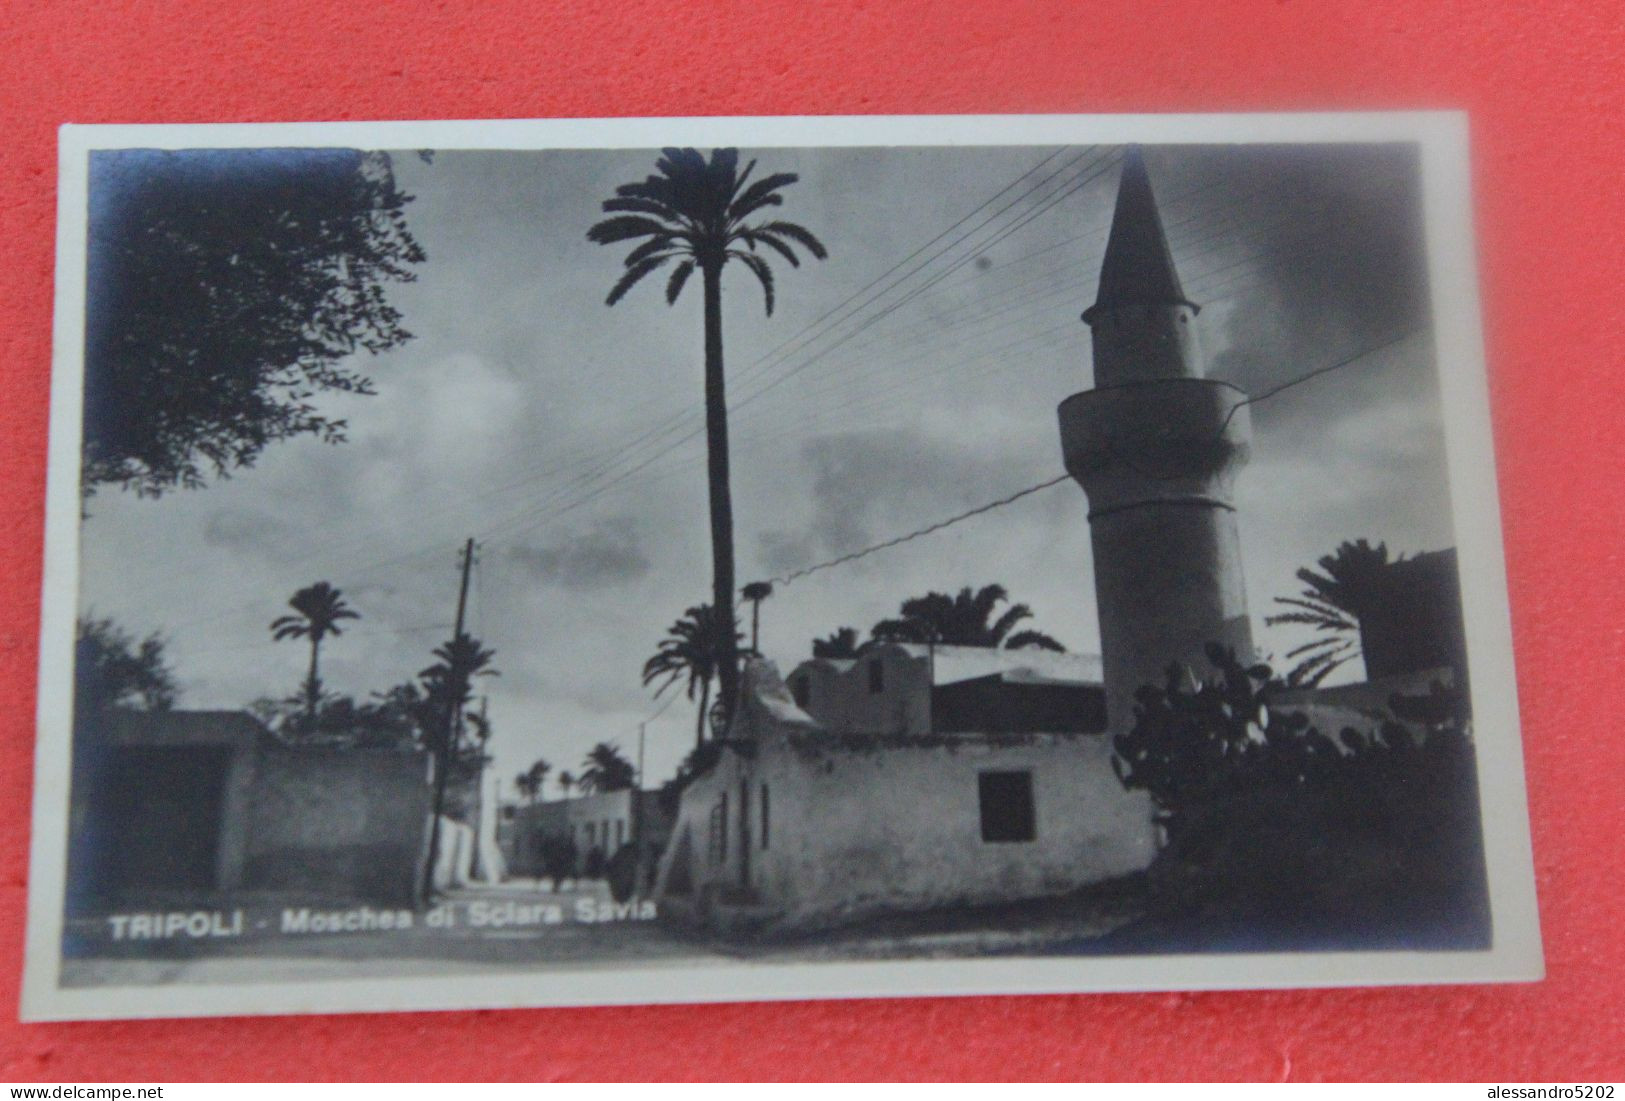 Libya Tripoli Moschea Sciara Savia Ed. Haggiag NV - Libye